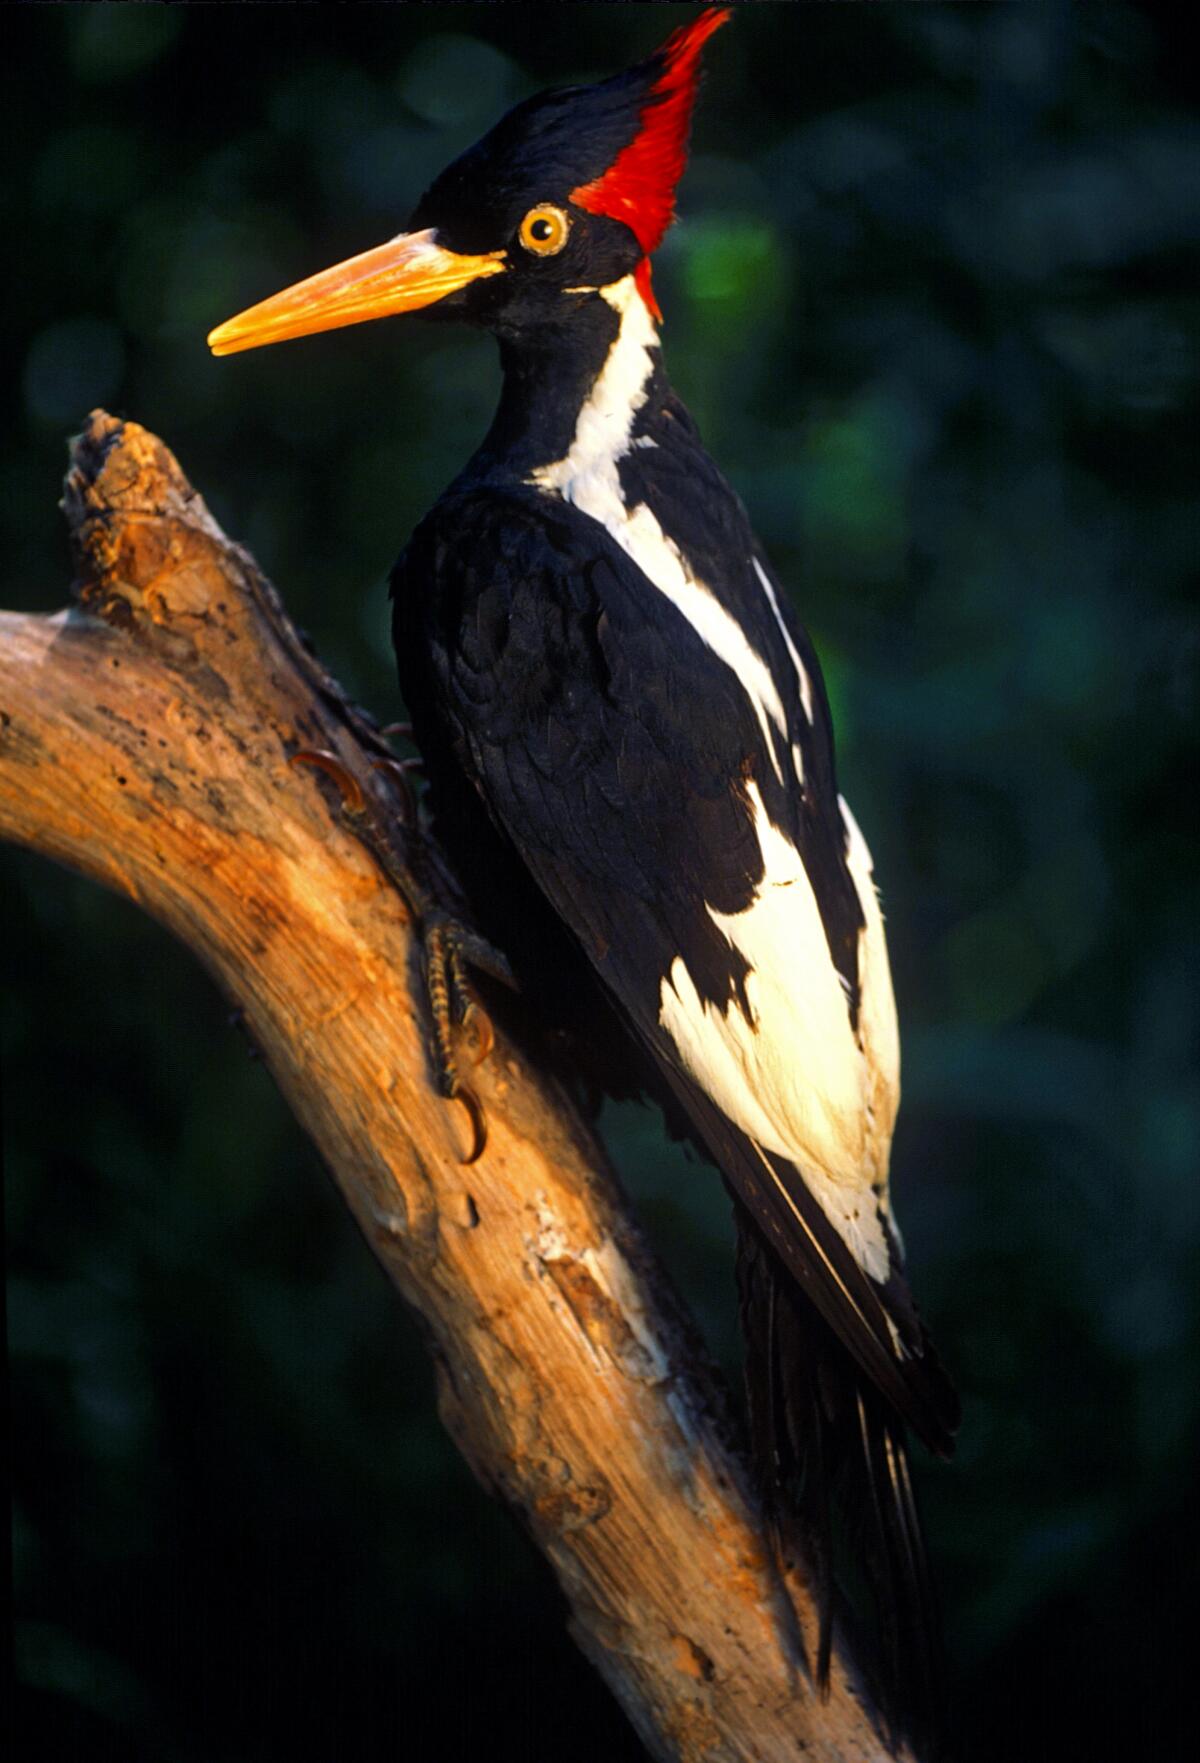 A mounted ivory-billed woodpecker